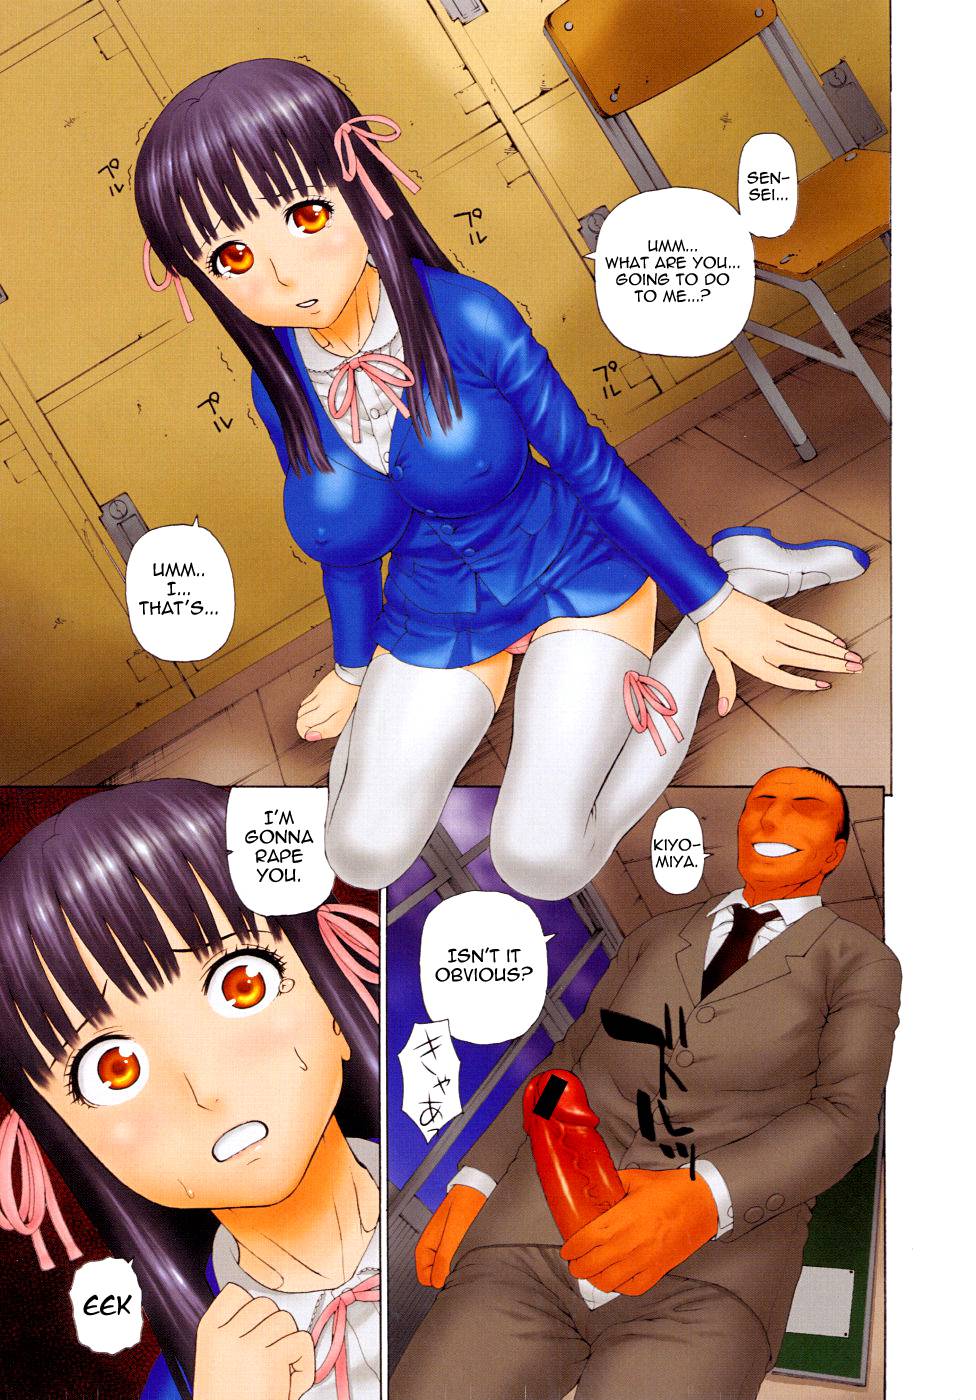 Reading Sex Education Hime Hajime Hentai 1 Sex Education 1 Page 1 Hentai Manga Online At 8142